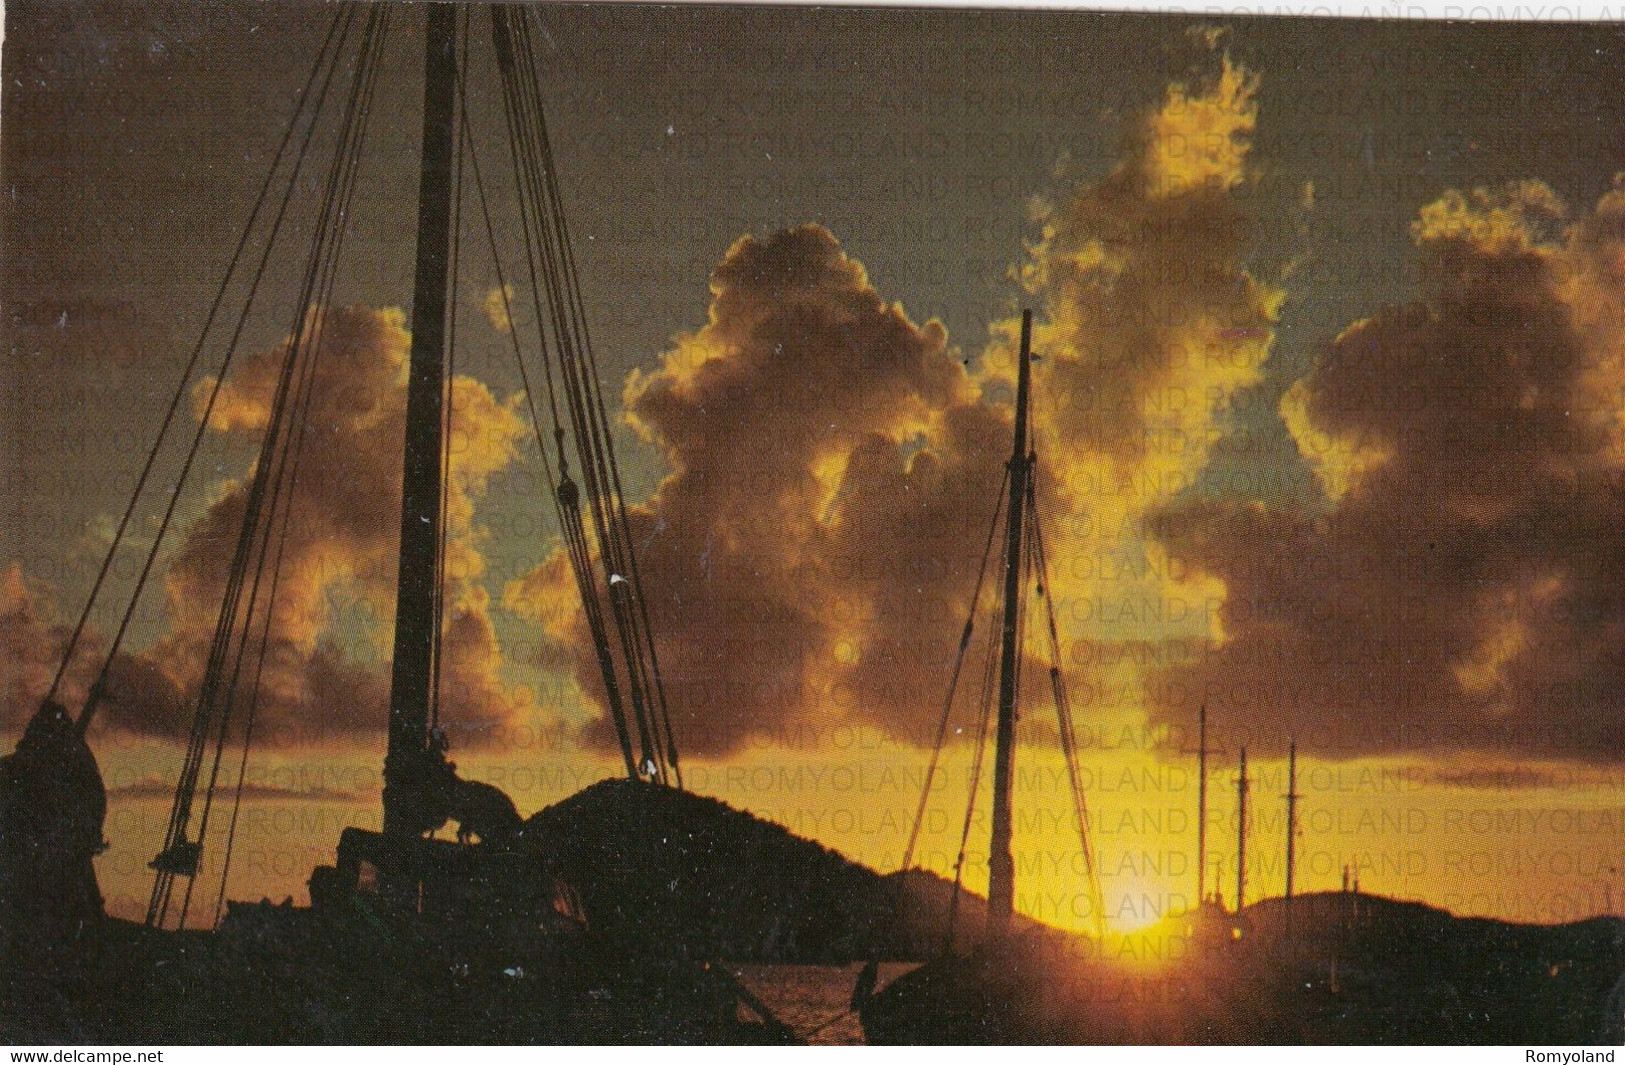 CARTOLINA  CHARLOTTE AMALIE,ANTILE,ISOLE VERGINI AMERICANE,STATI UNITI-SUNSET IN THE VIRGIN ISLANDS-VIAGGIATA 1967 - Vierges (Iles), Amér.